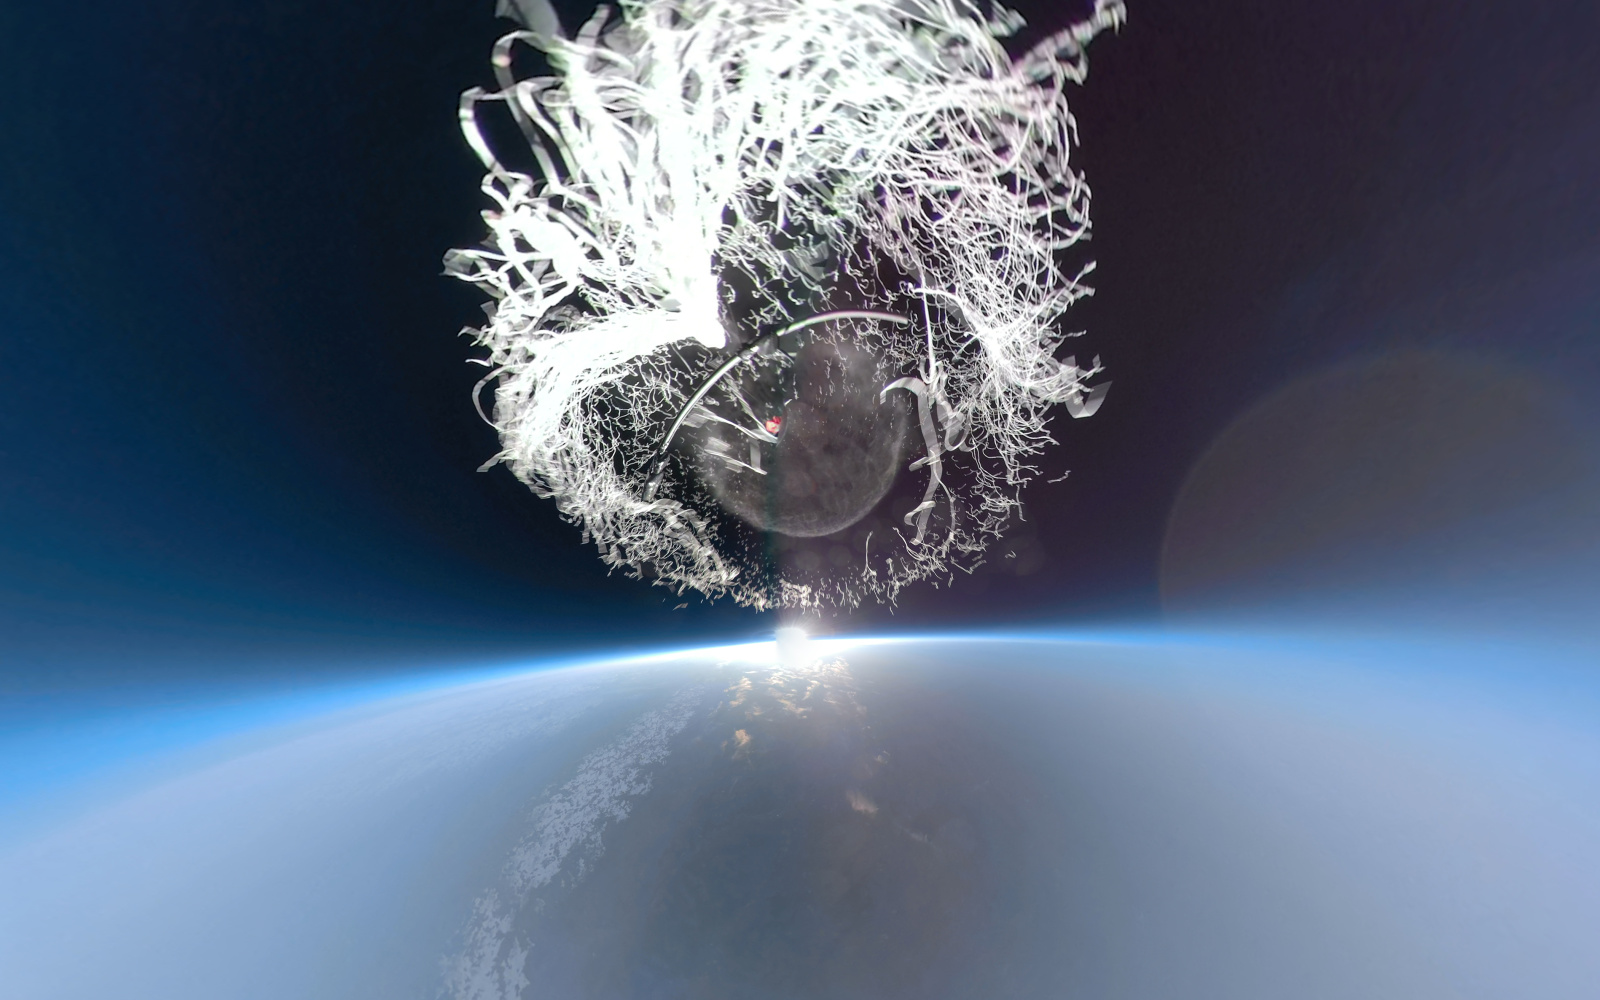 Ballonexplosion im Weltall über der Erde. Der Ballon zerfasert kugelförmig.